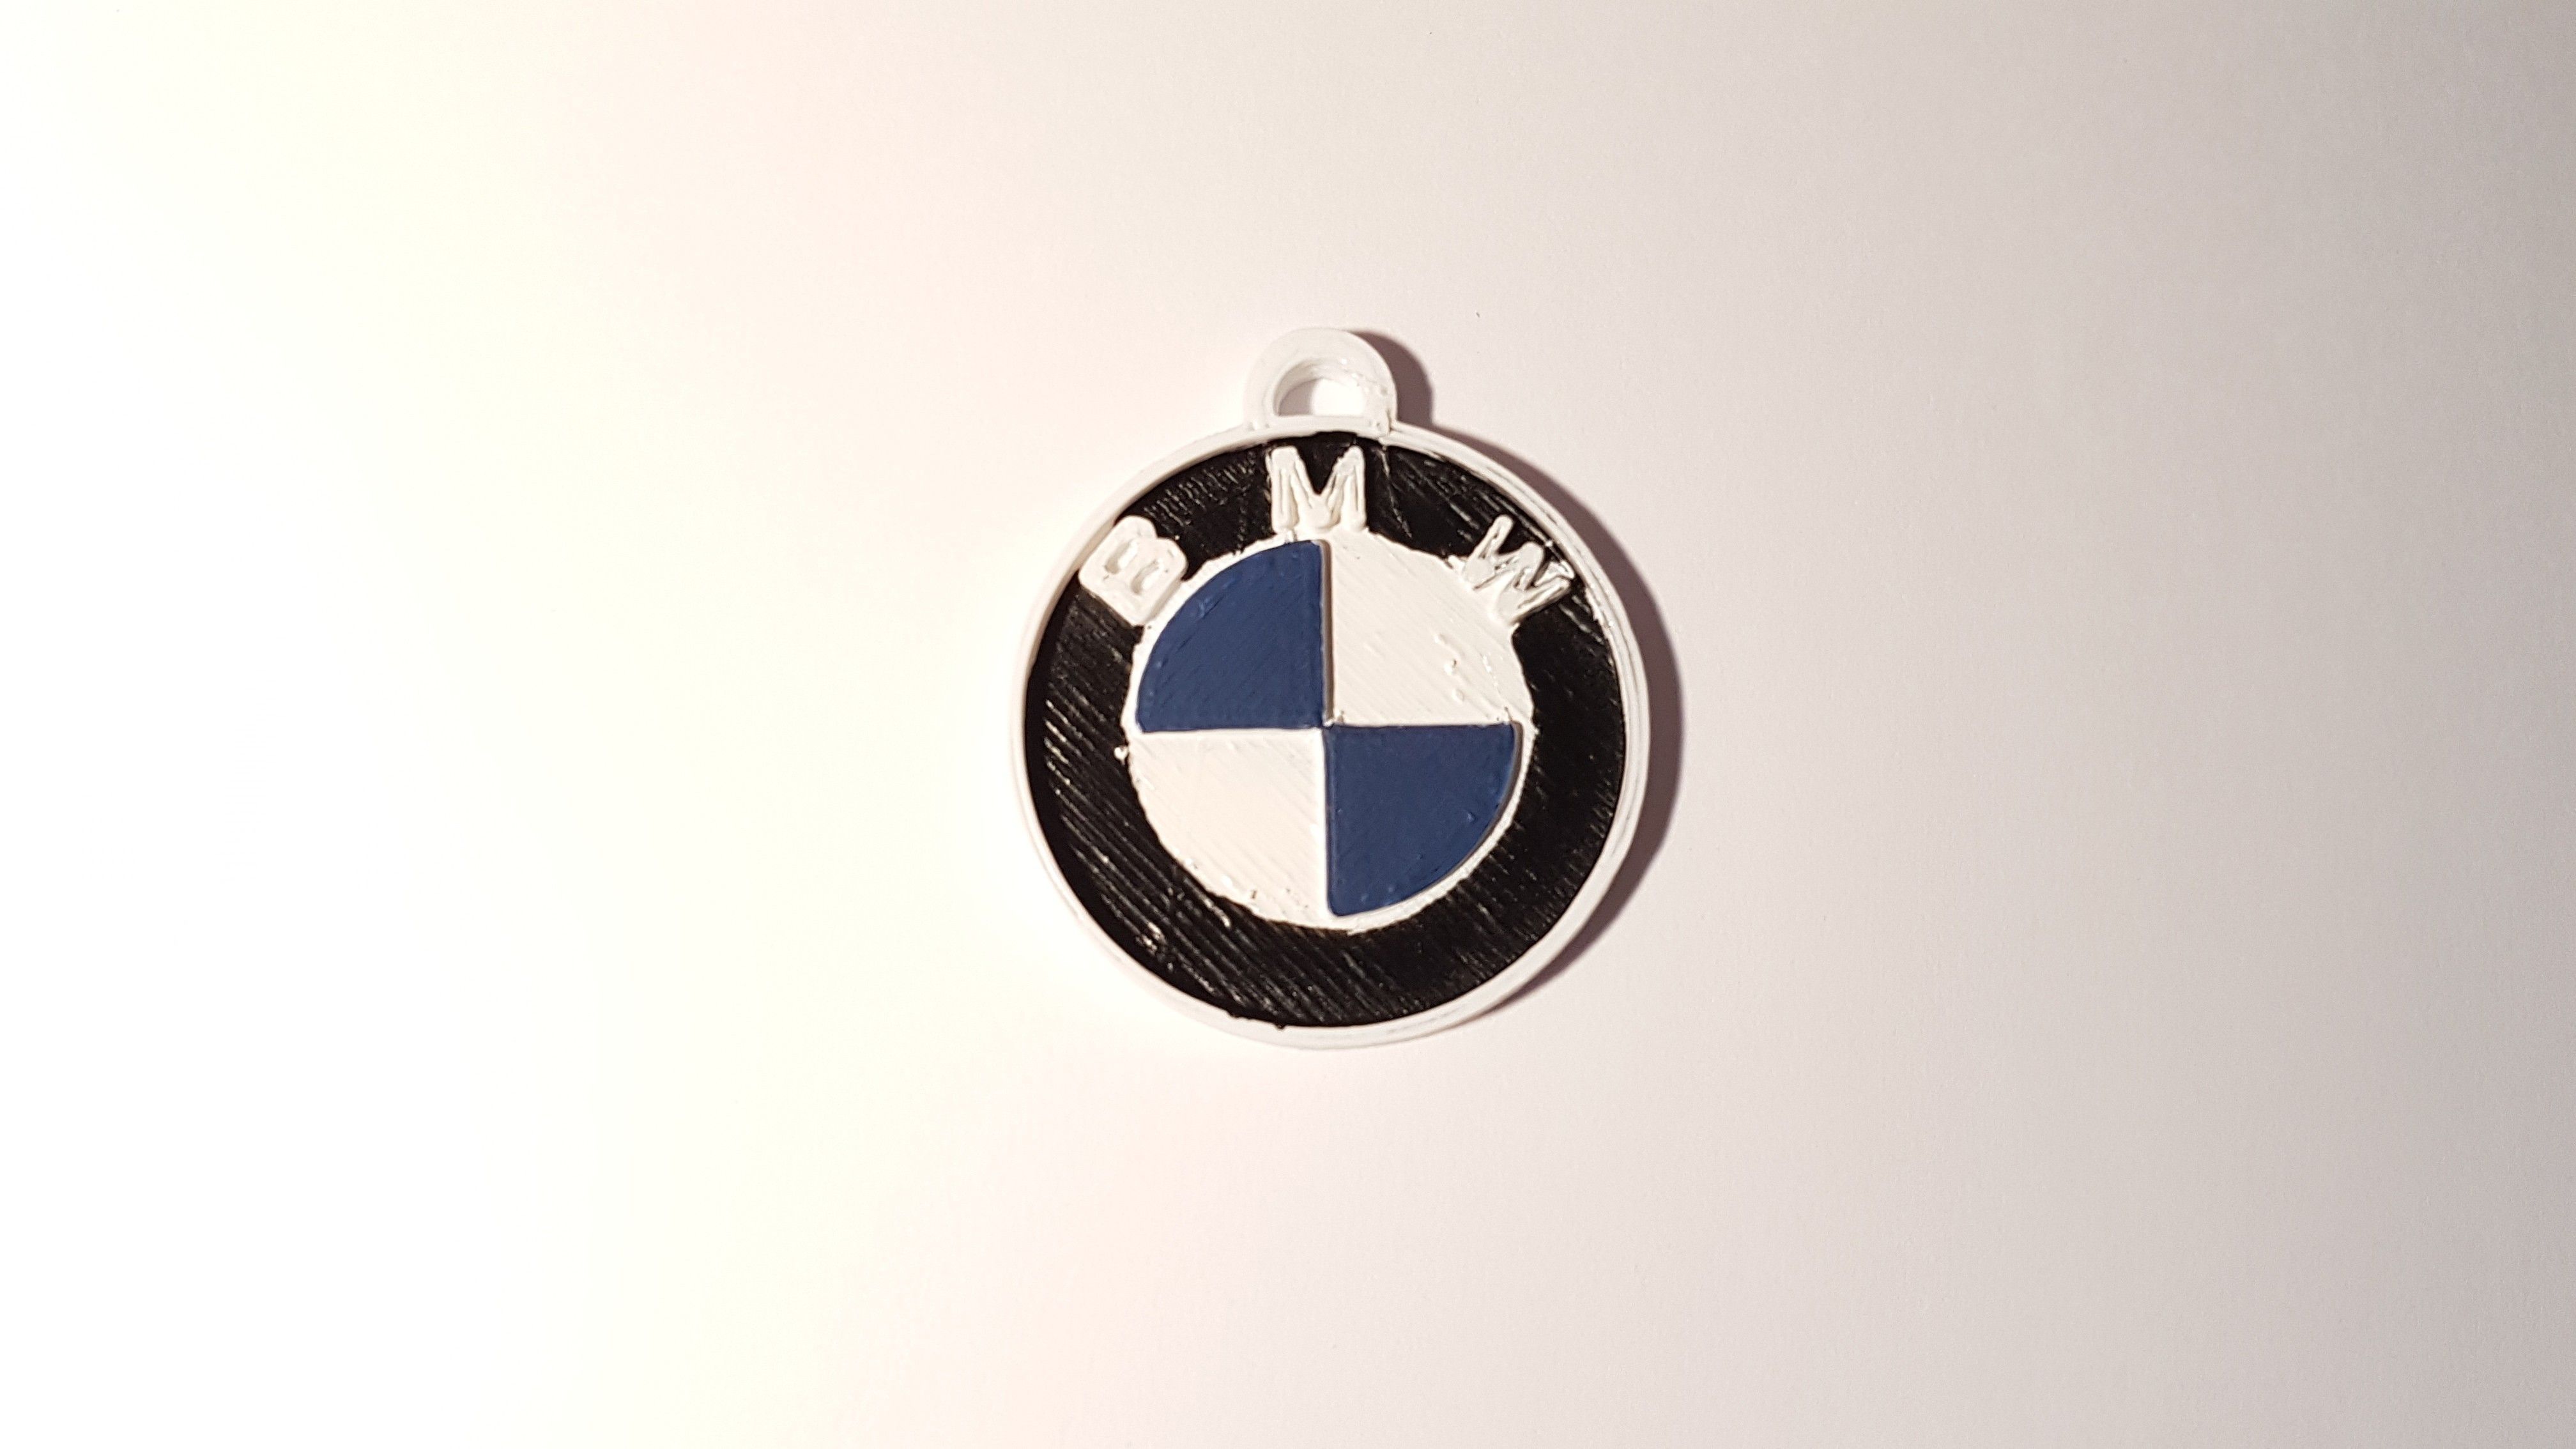 20190405_213950.jpg Free STL file BMW key ring・Model to download and 3D print, f1l2o30